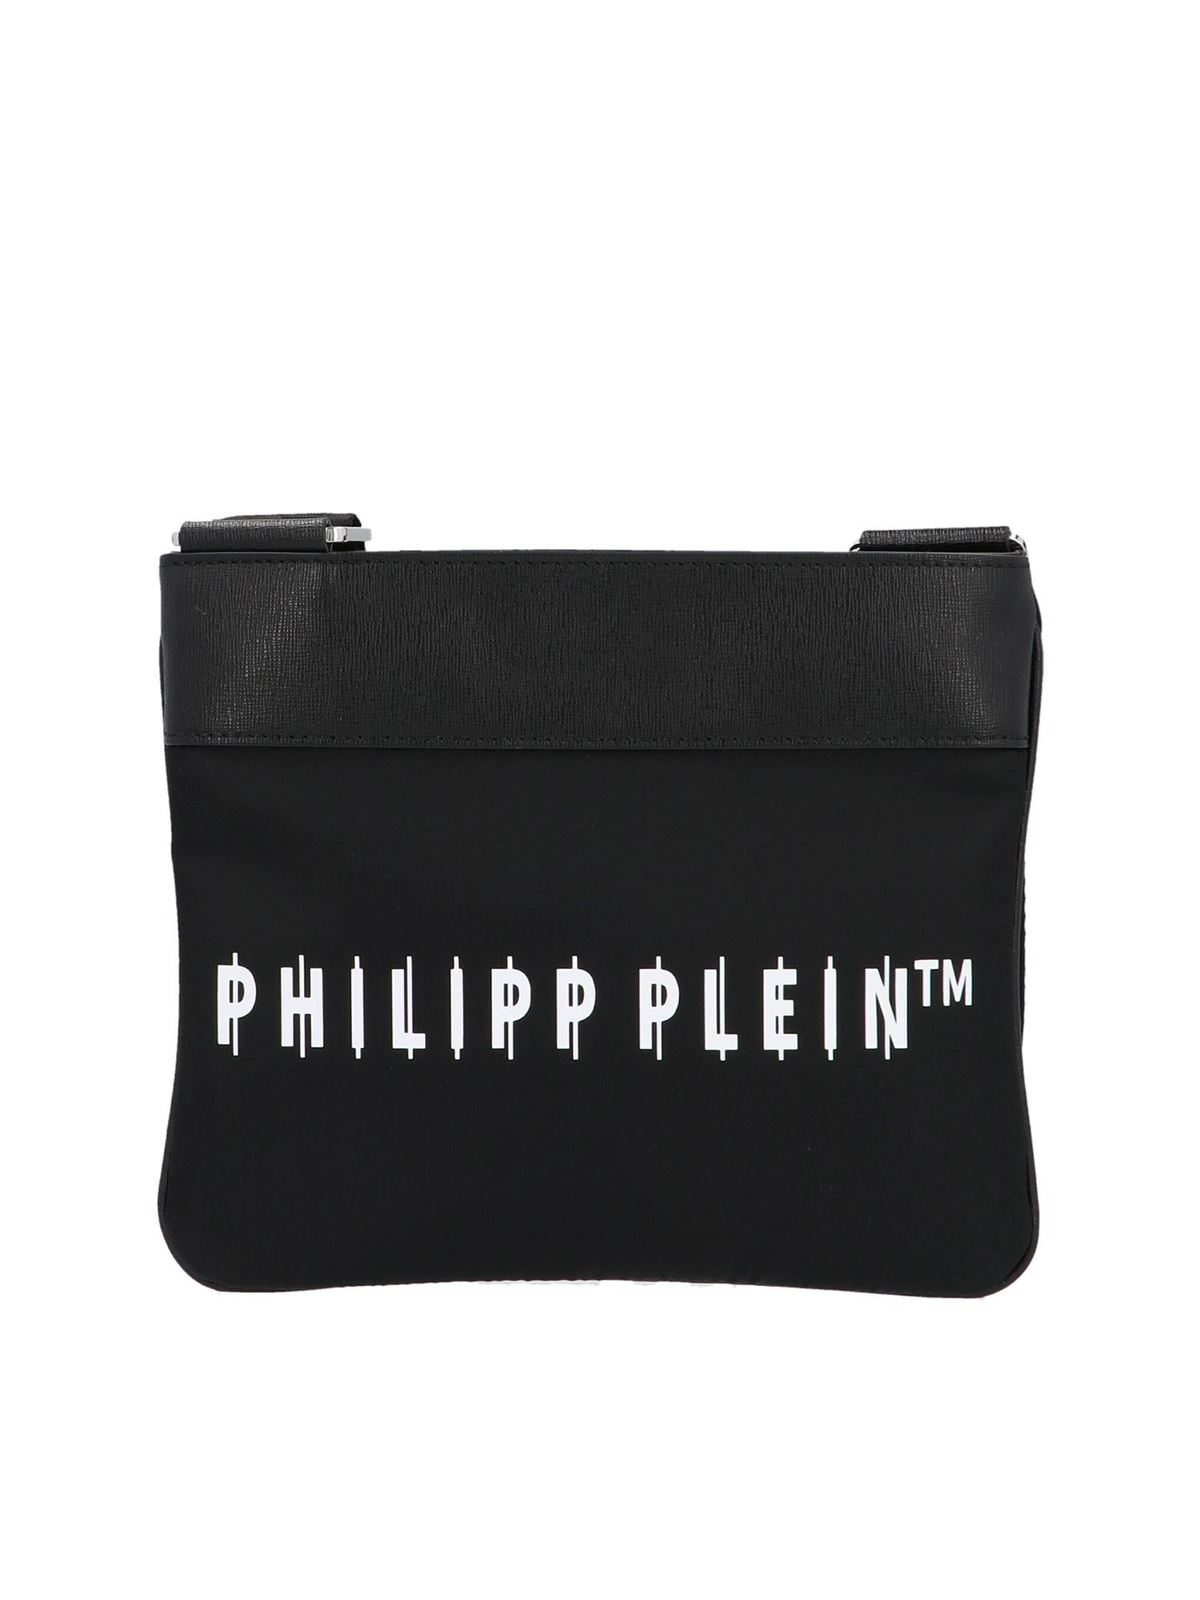 Philipp Plein - Philipp Plein TM bag in black - cross body bags ...